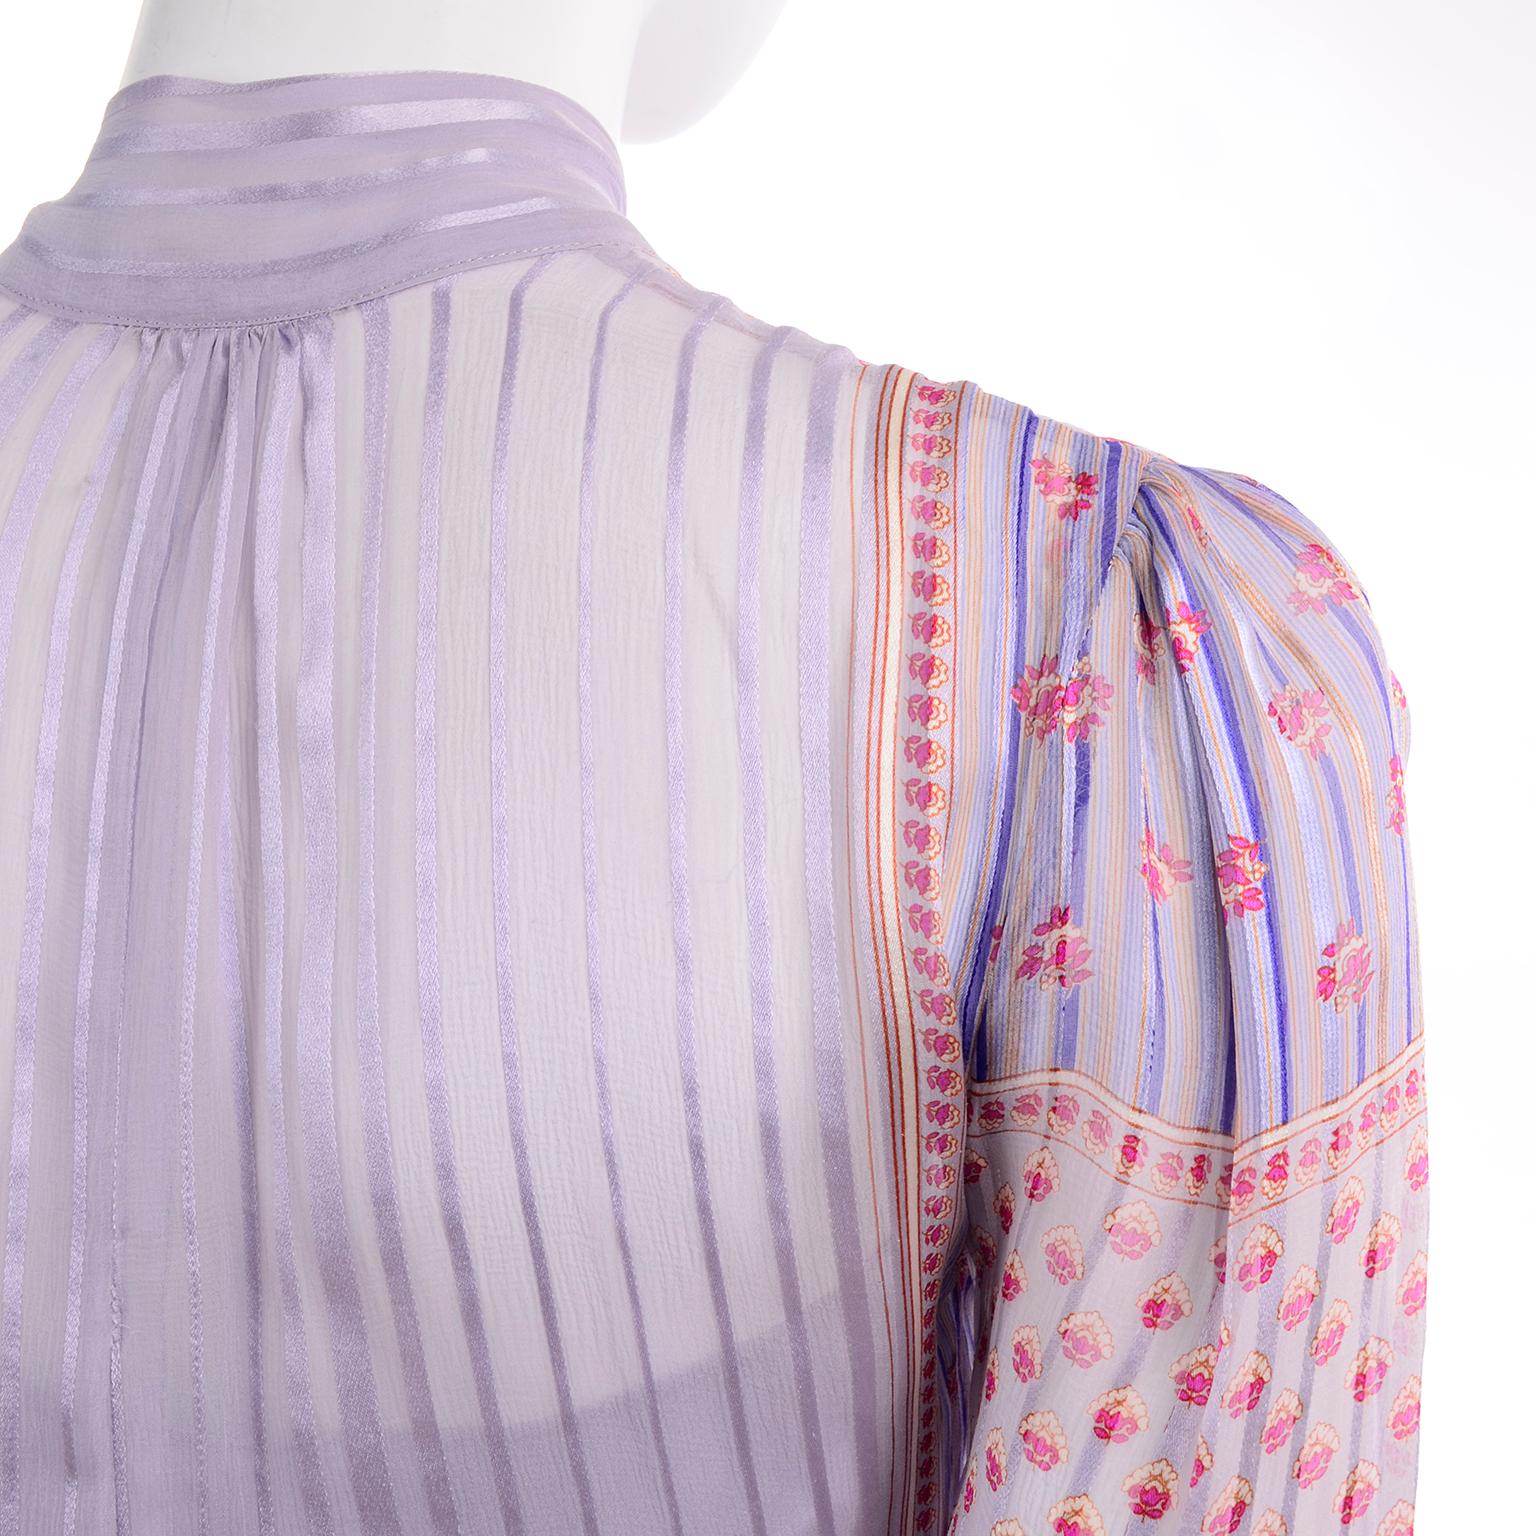 Designer Silk Chiffon 2 Pc Dress in Purple Yellow Pink Floral Print Pattern Mix 8